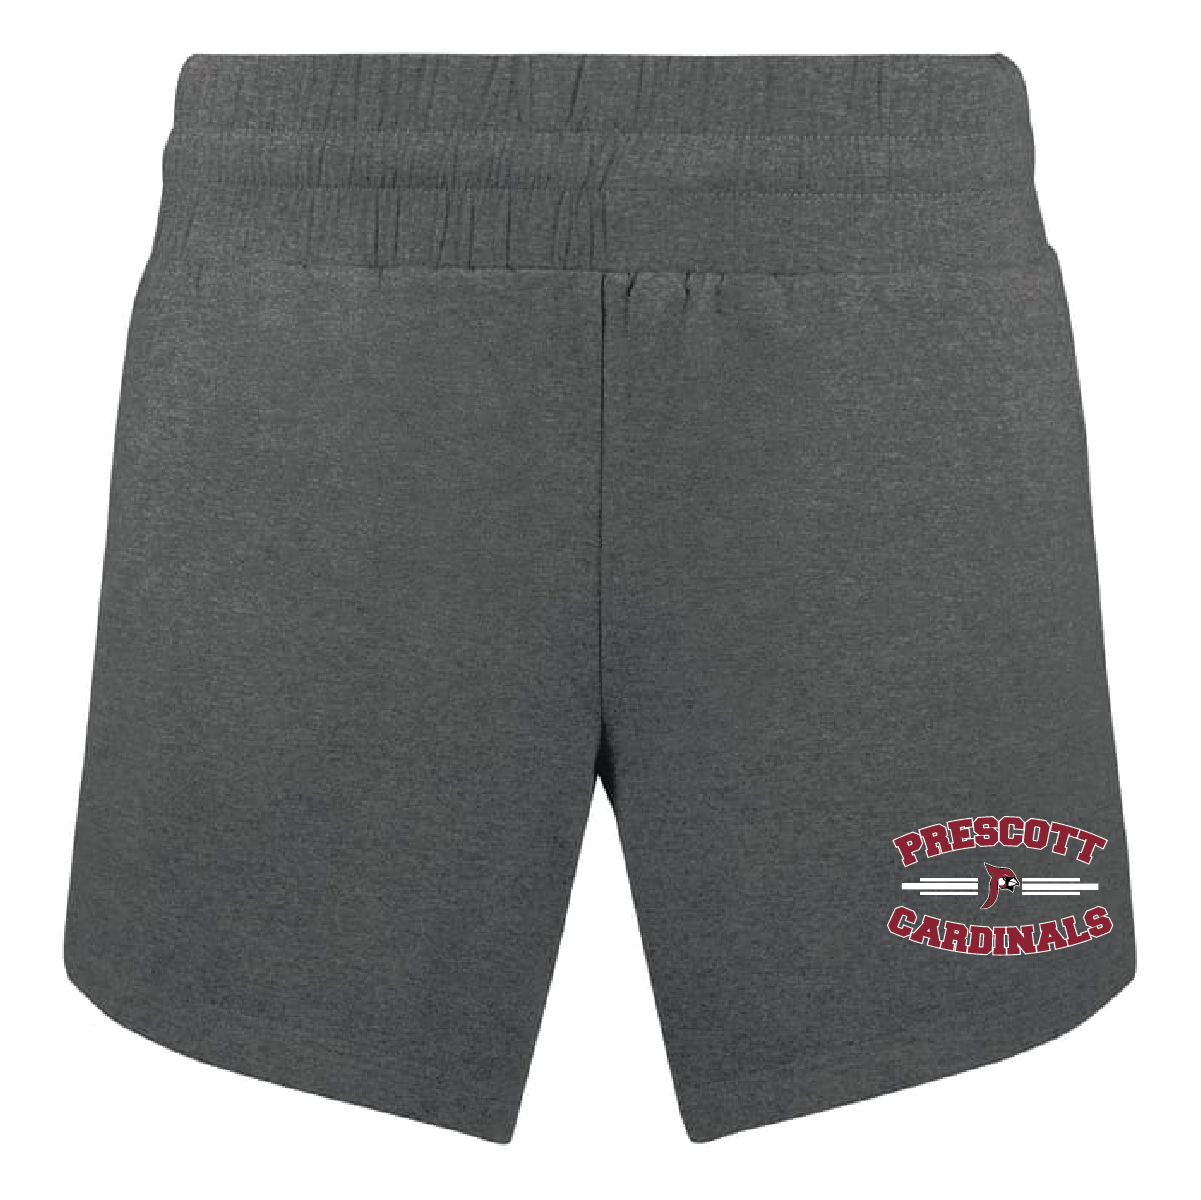 Prescott Retail Online Ladies Ventura Knit Shorts